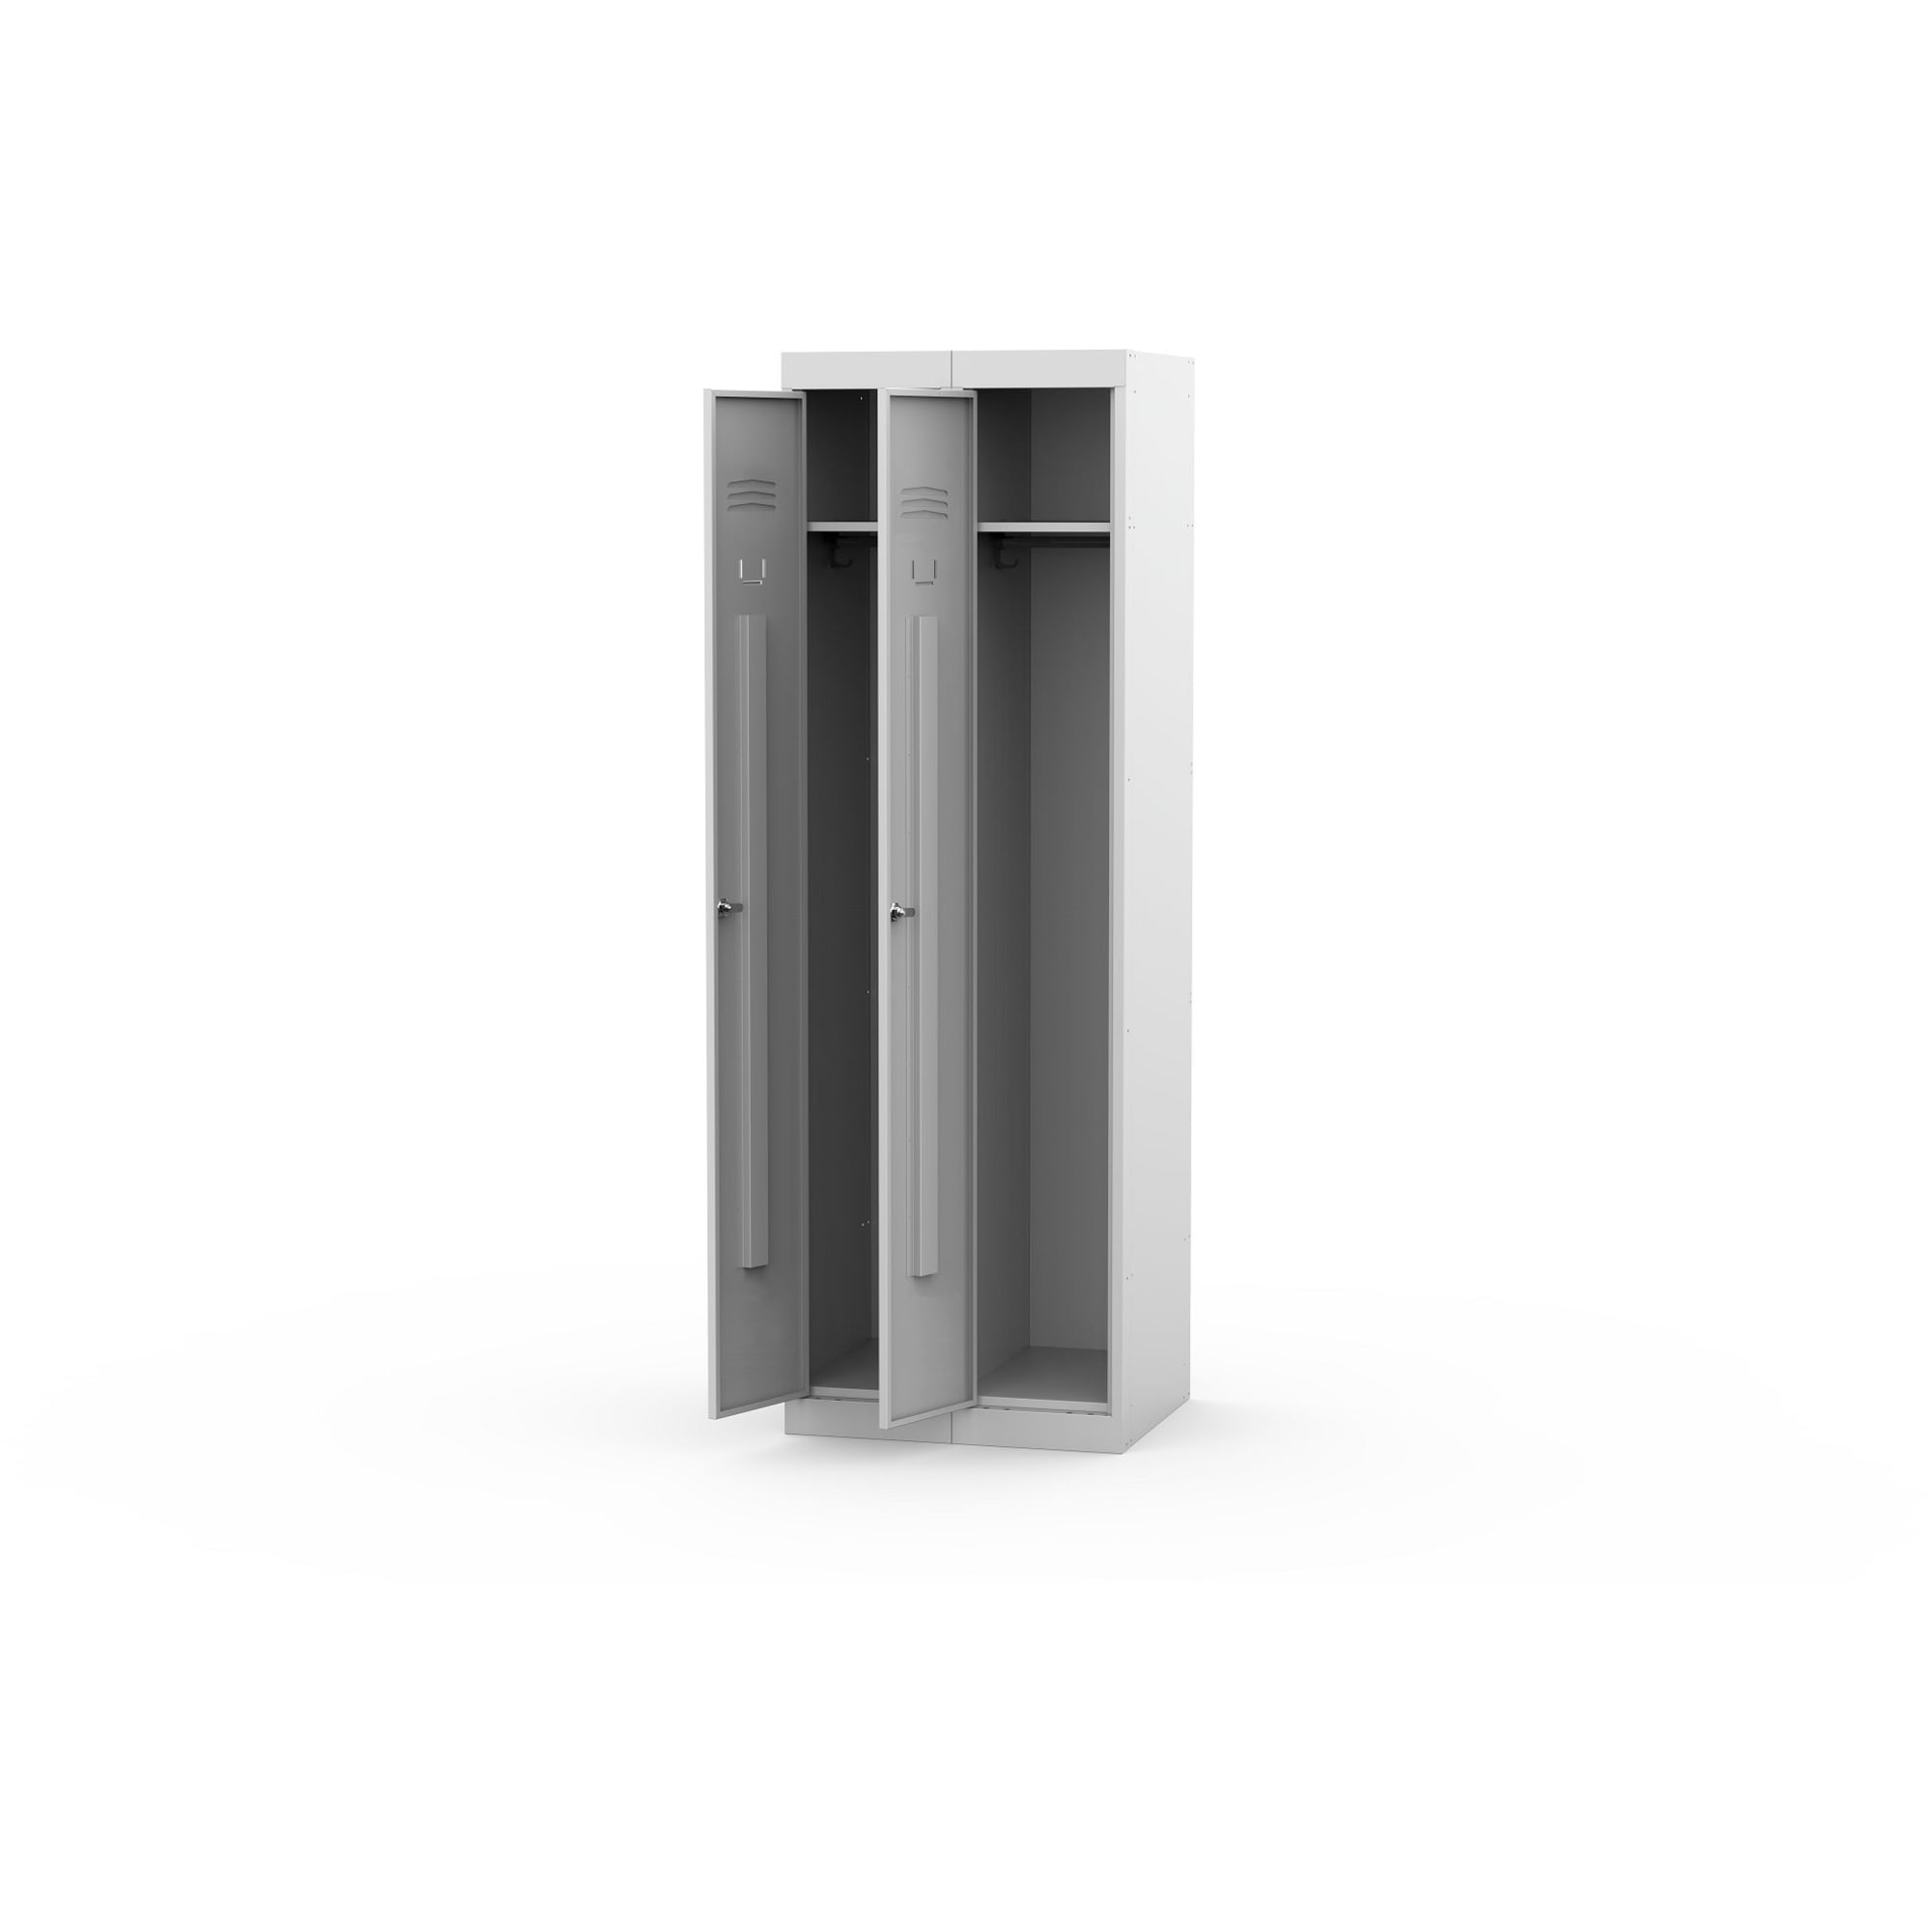 Шкаф для спецодежды ШРС-11-300 разборный 185x30x50 см, сталь, цвет серый